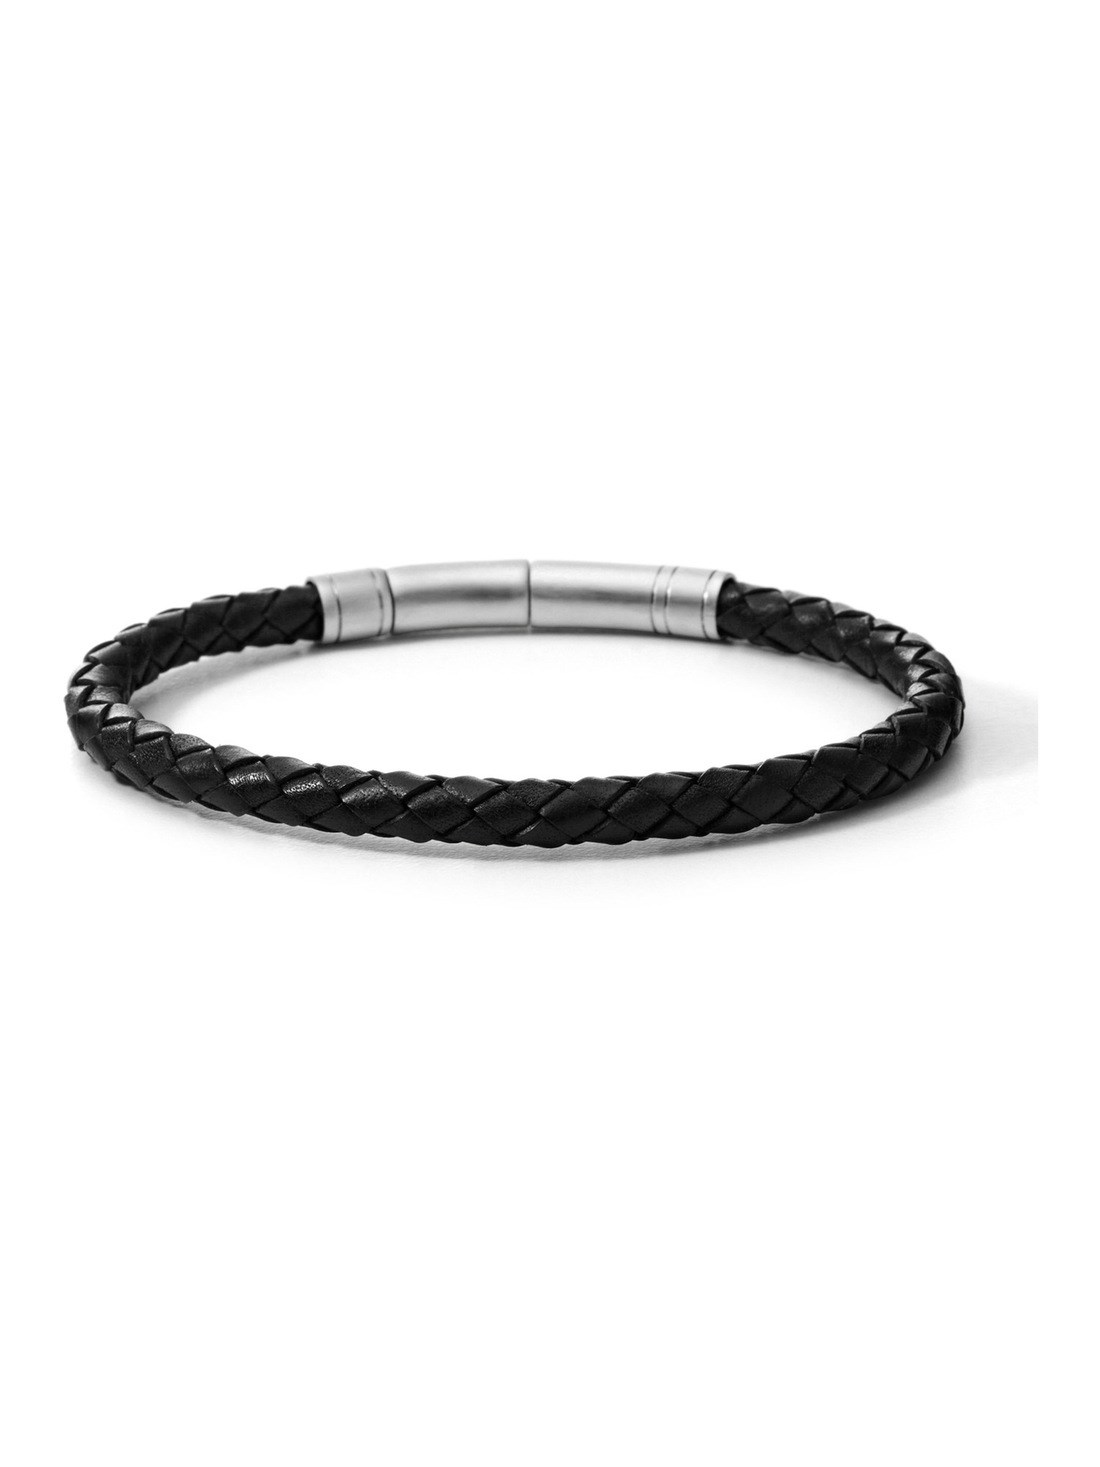 TwoSix Dark Lava • Leather Bracelet | INMIND Handcrafted Jewellery